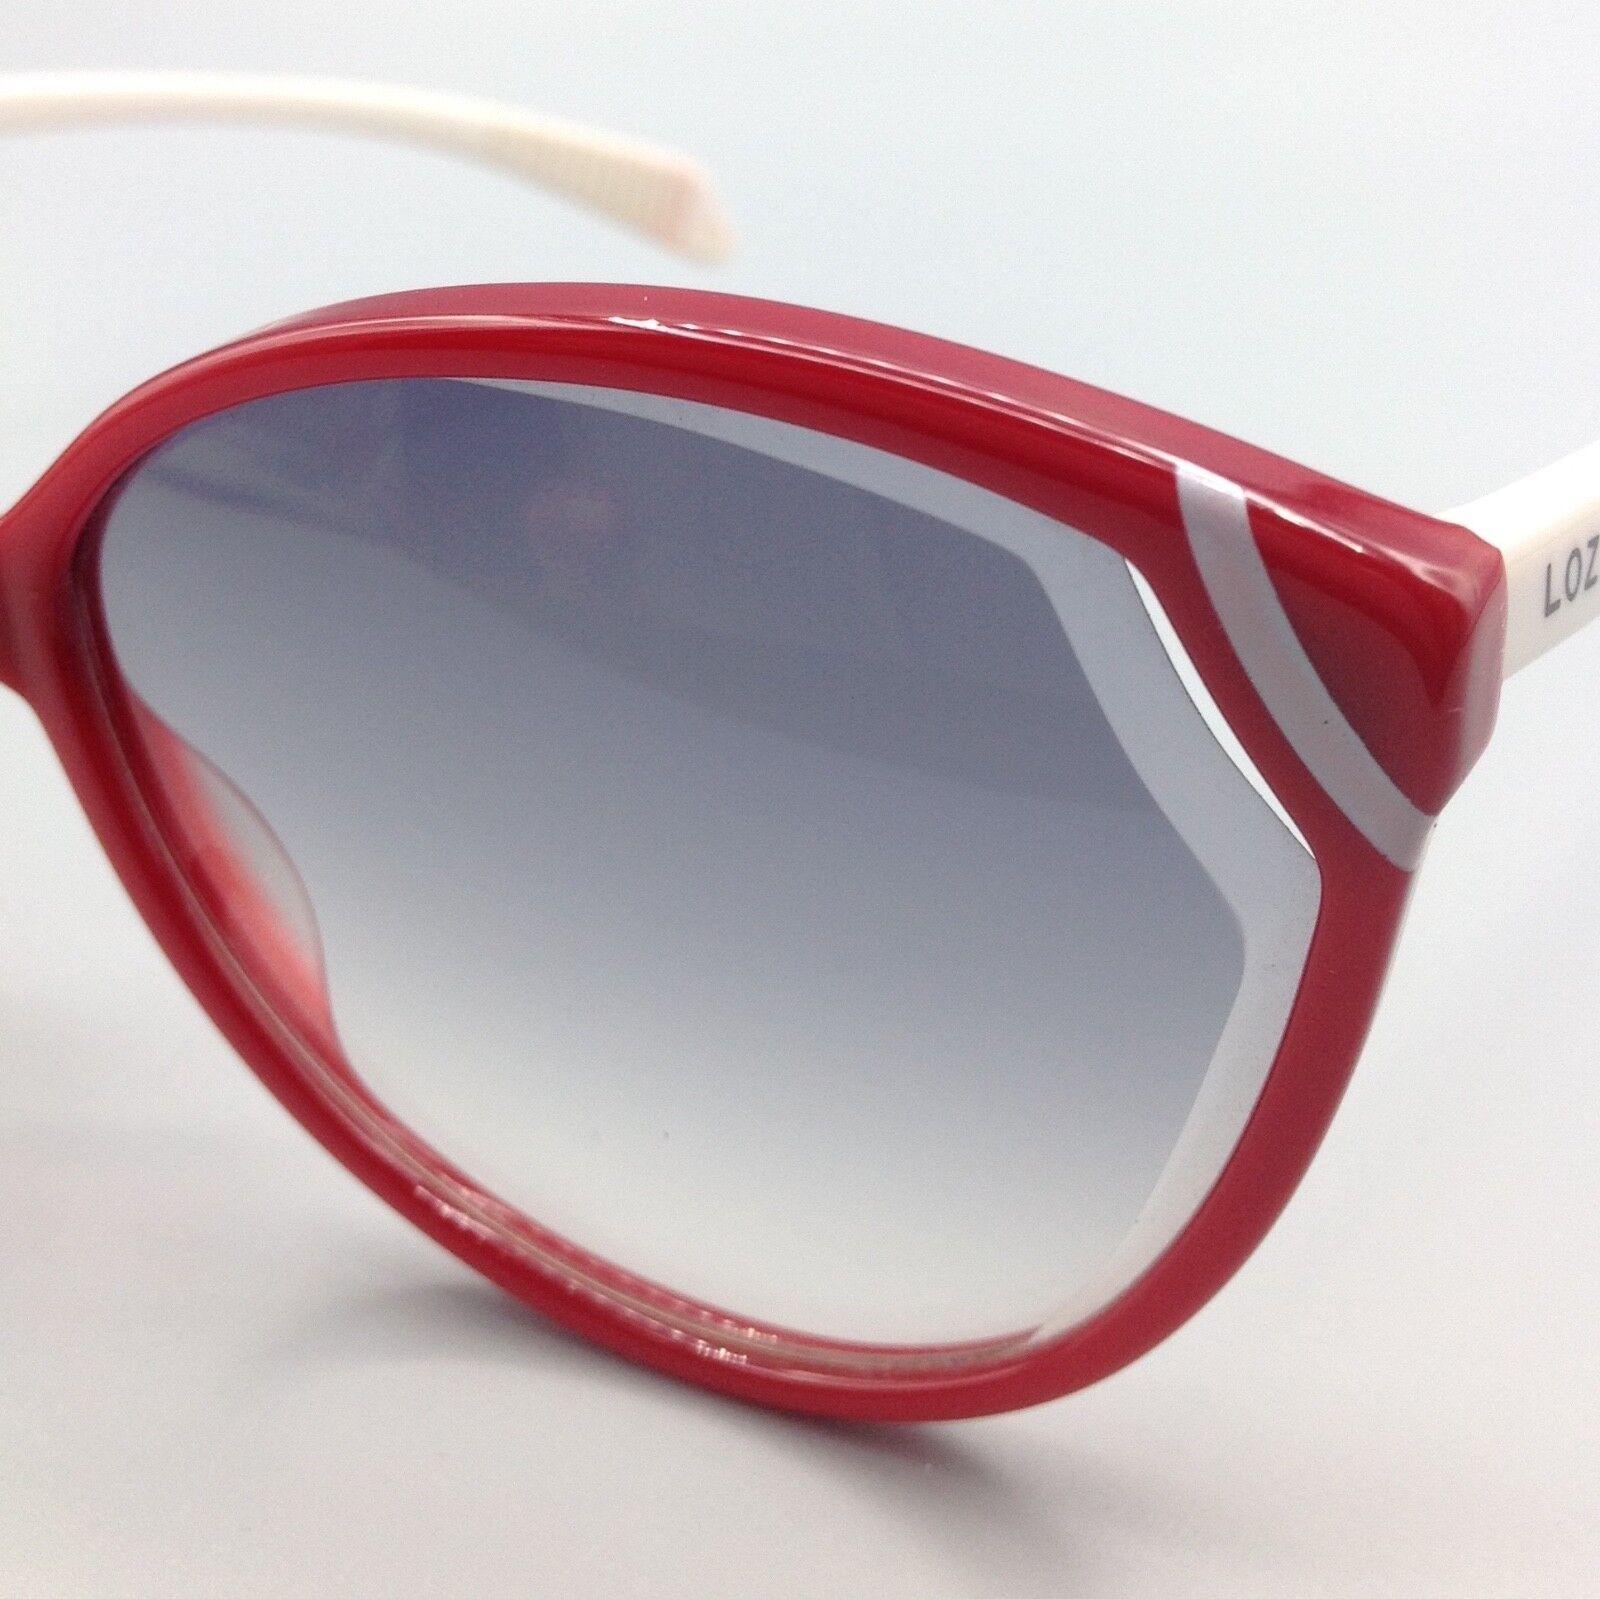 Occhiale da sole LOZZA mod. ACAPULCO vintage red frame made in Italy Sunglasses